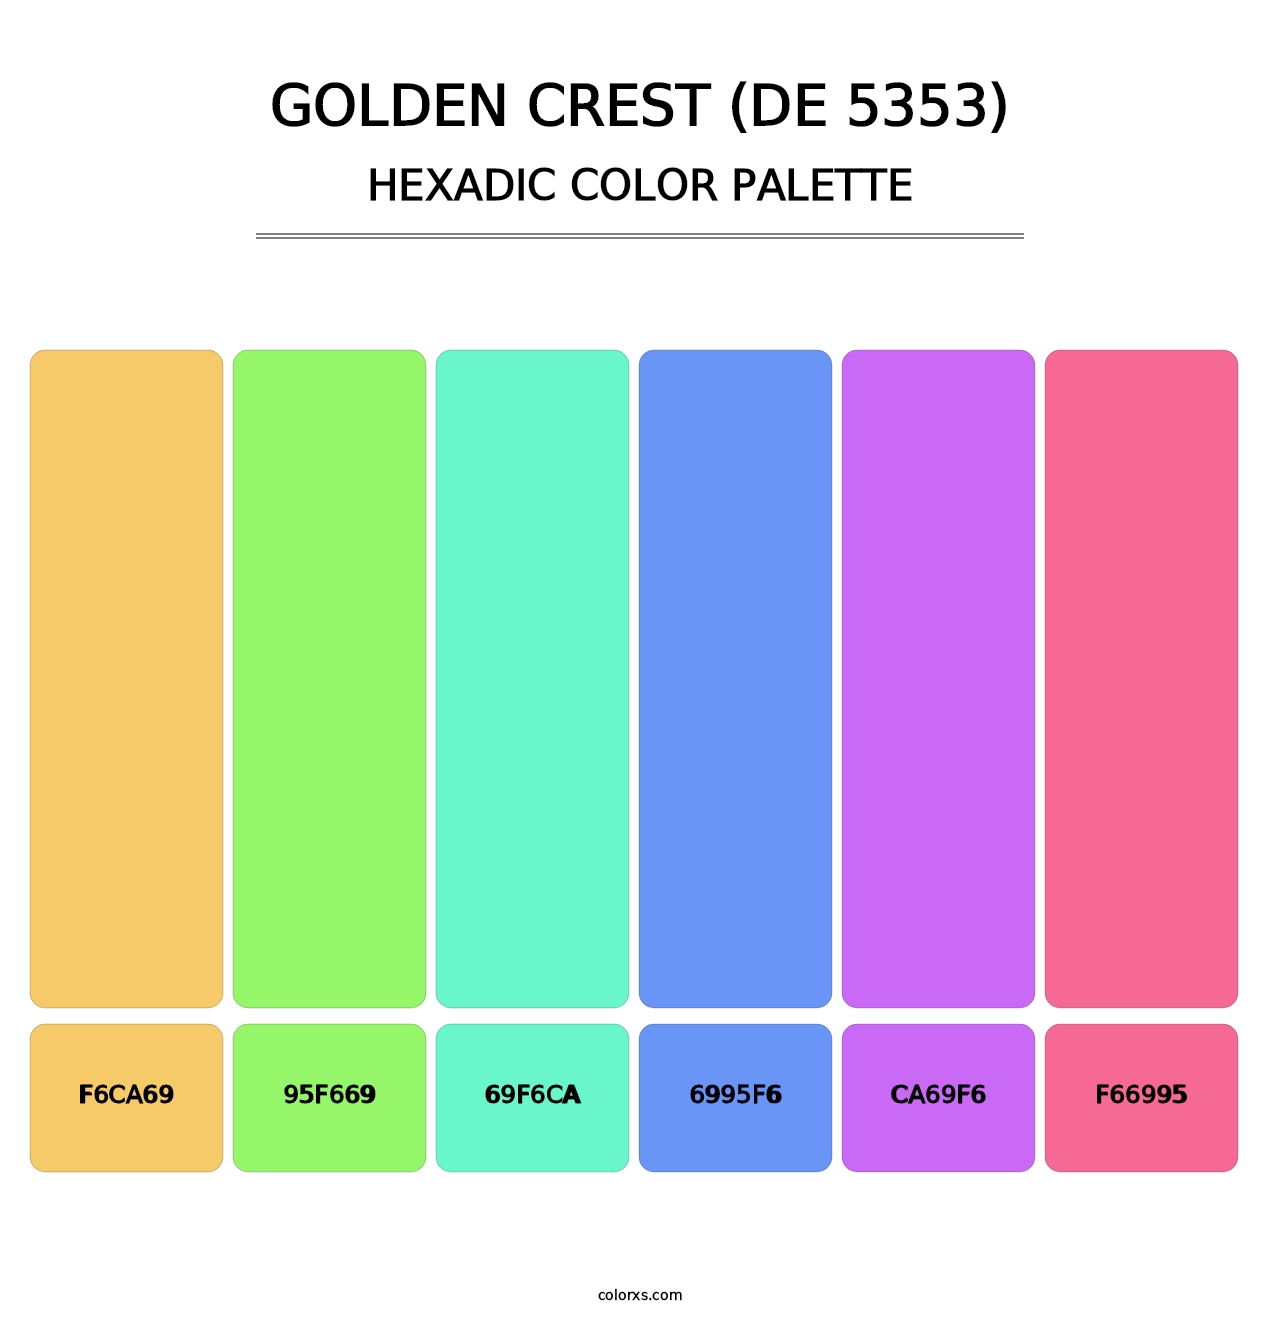 Golden Crest (DE 5353) - Hexadic Color Palette